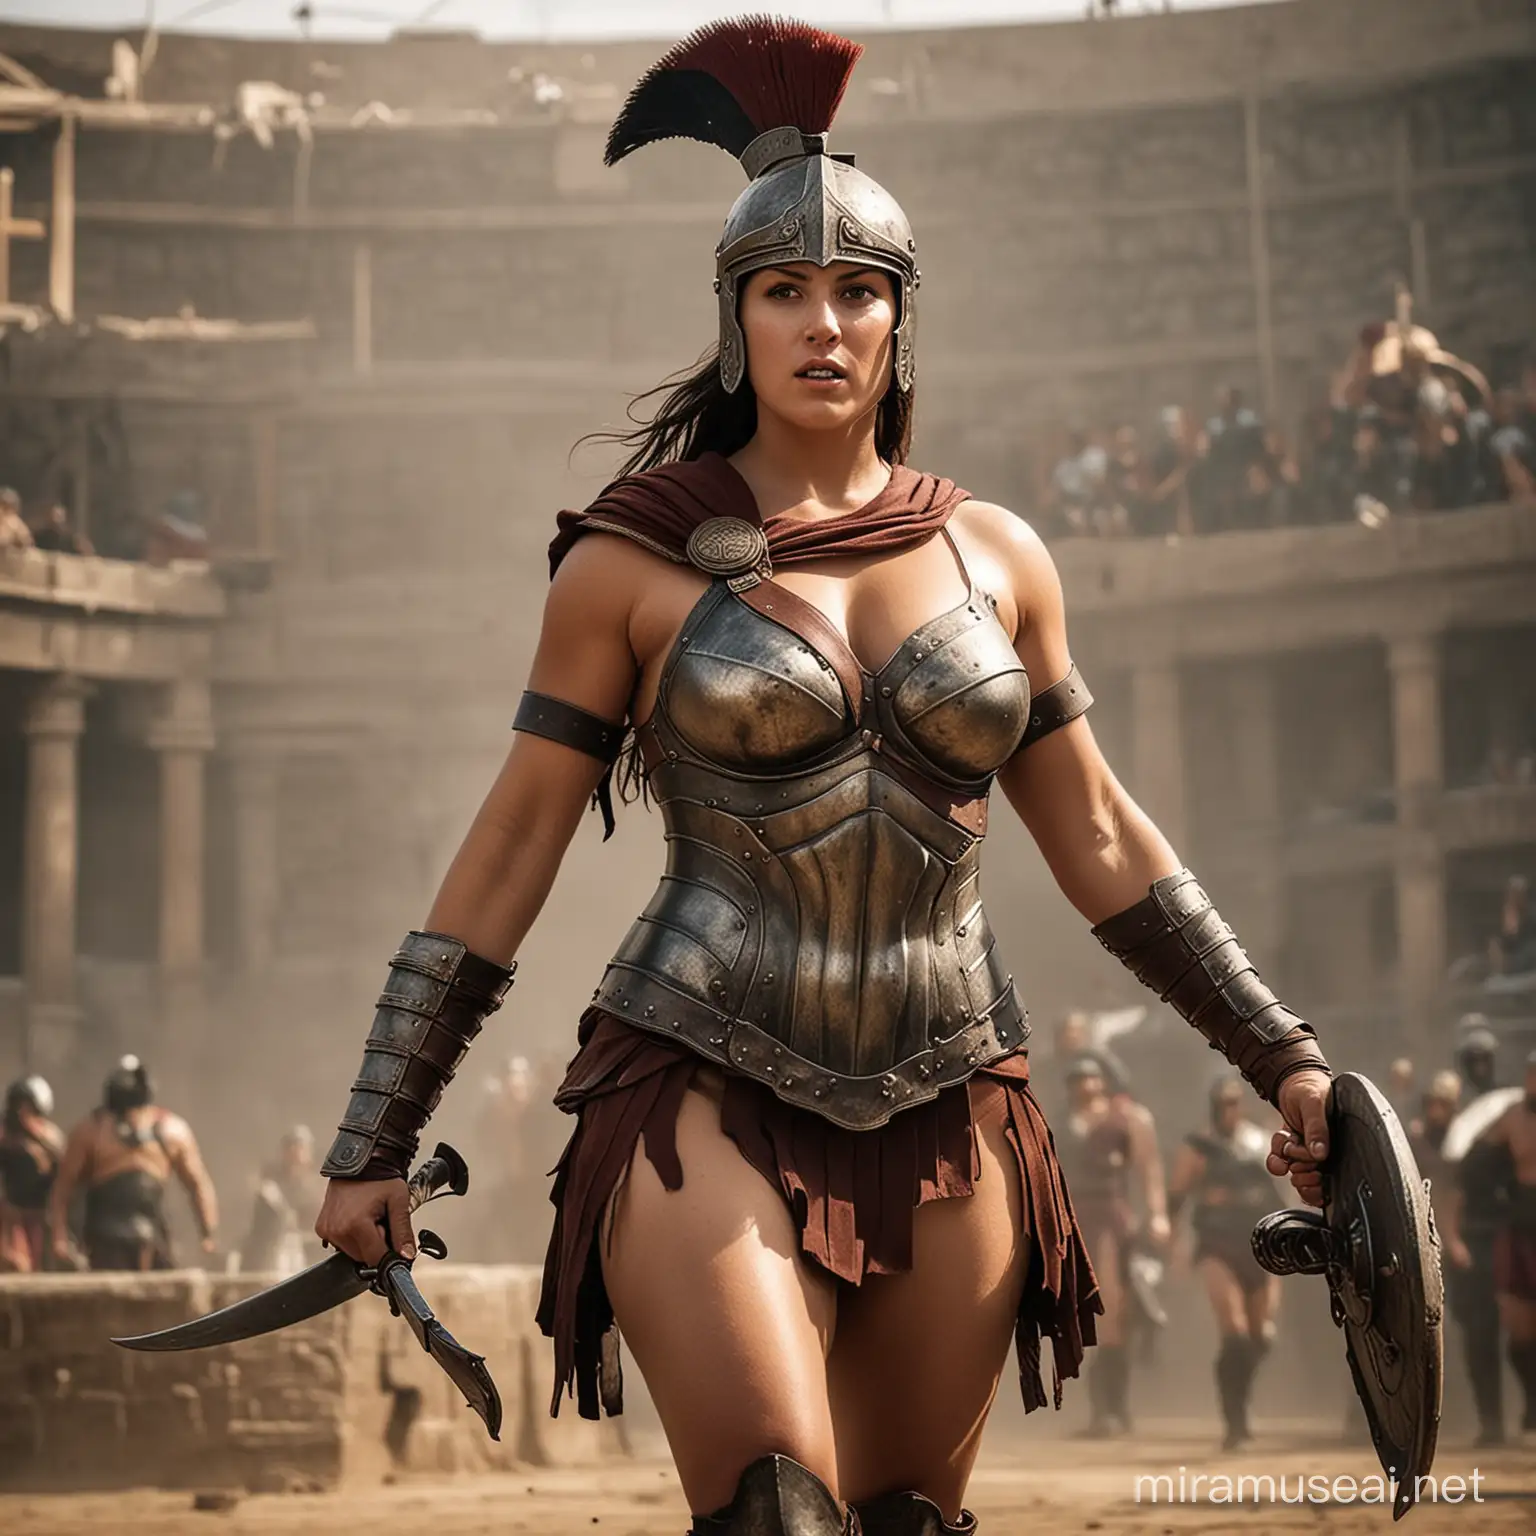 Voluptuous Female Spartan Warrior in Gladiator Arena